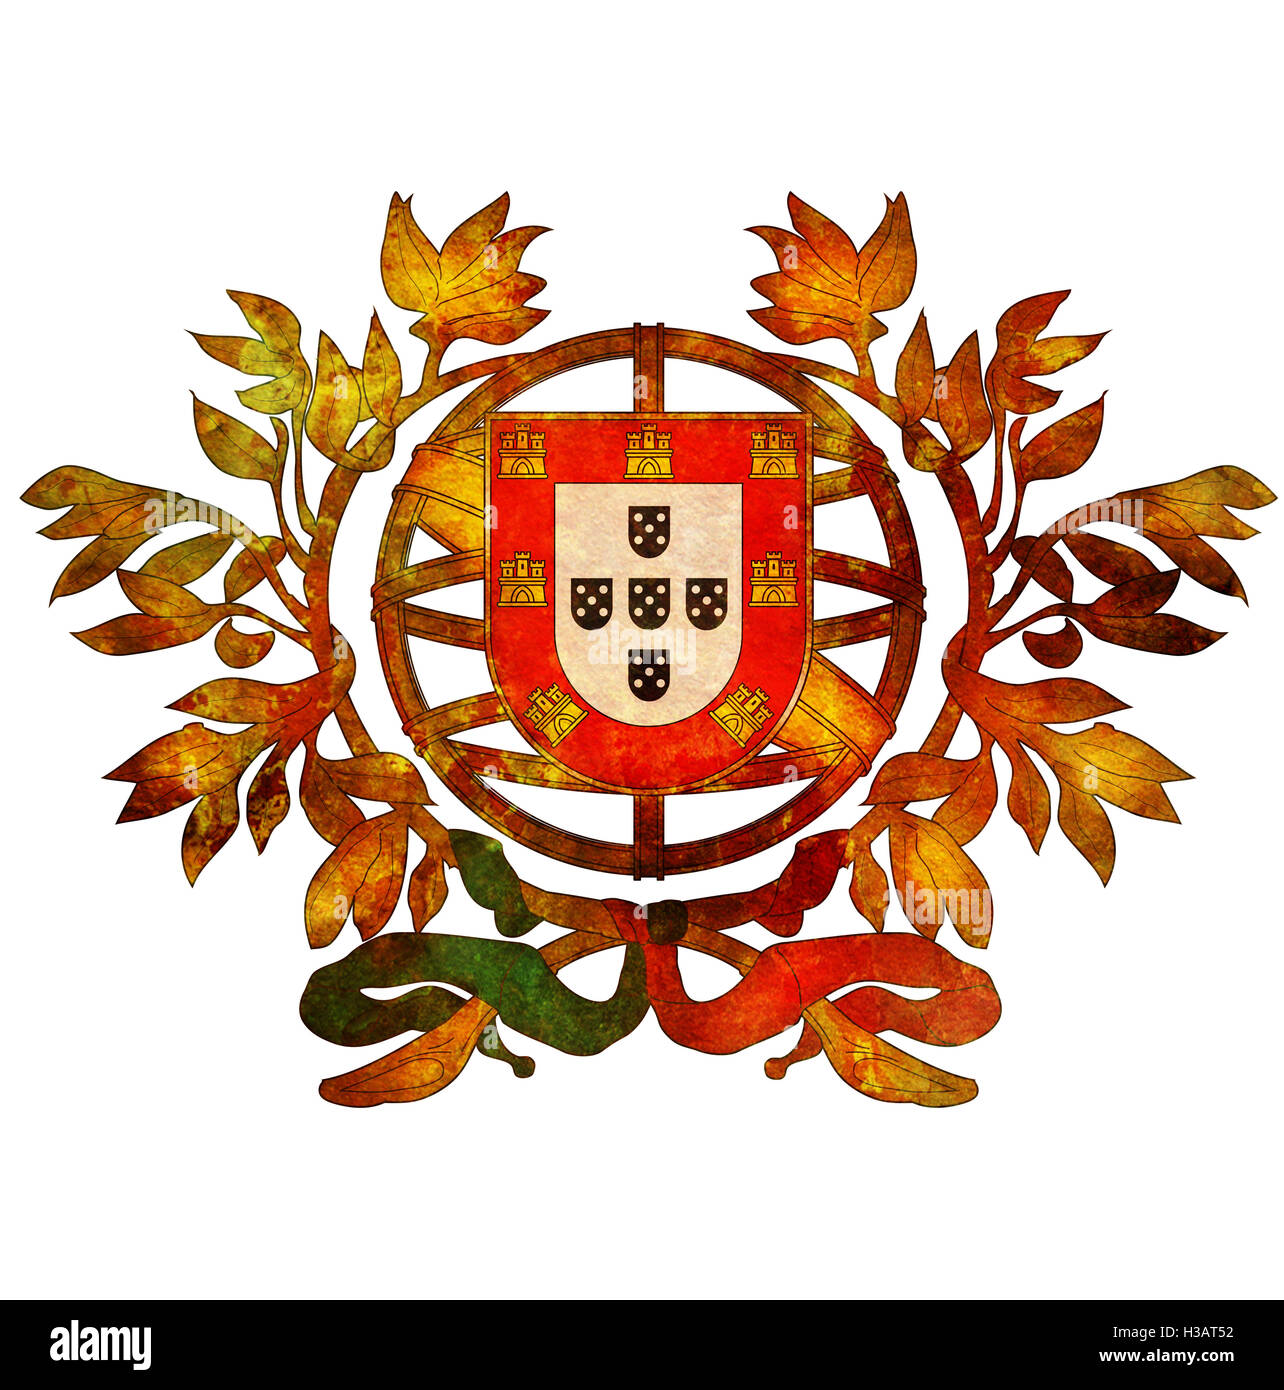 Coat of arms of portugal -Fotos und -Bildmaterial in hoher Auflösung -  Seite 2 - Alamy